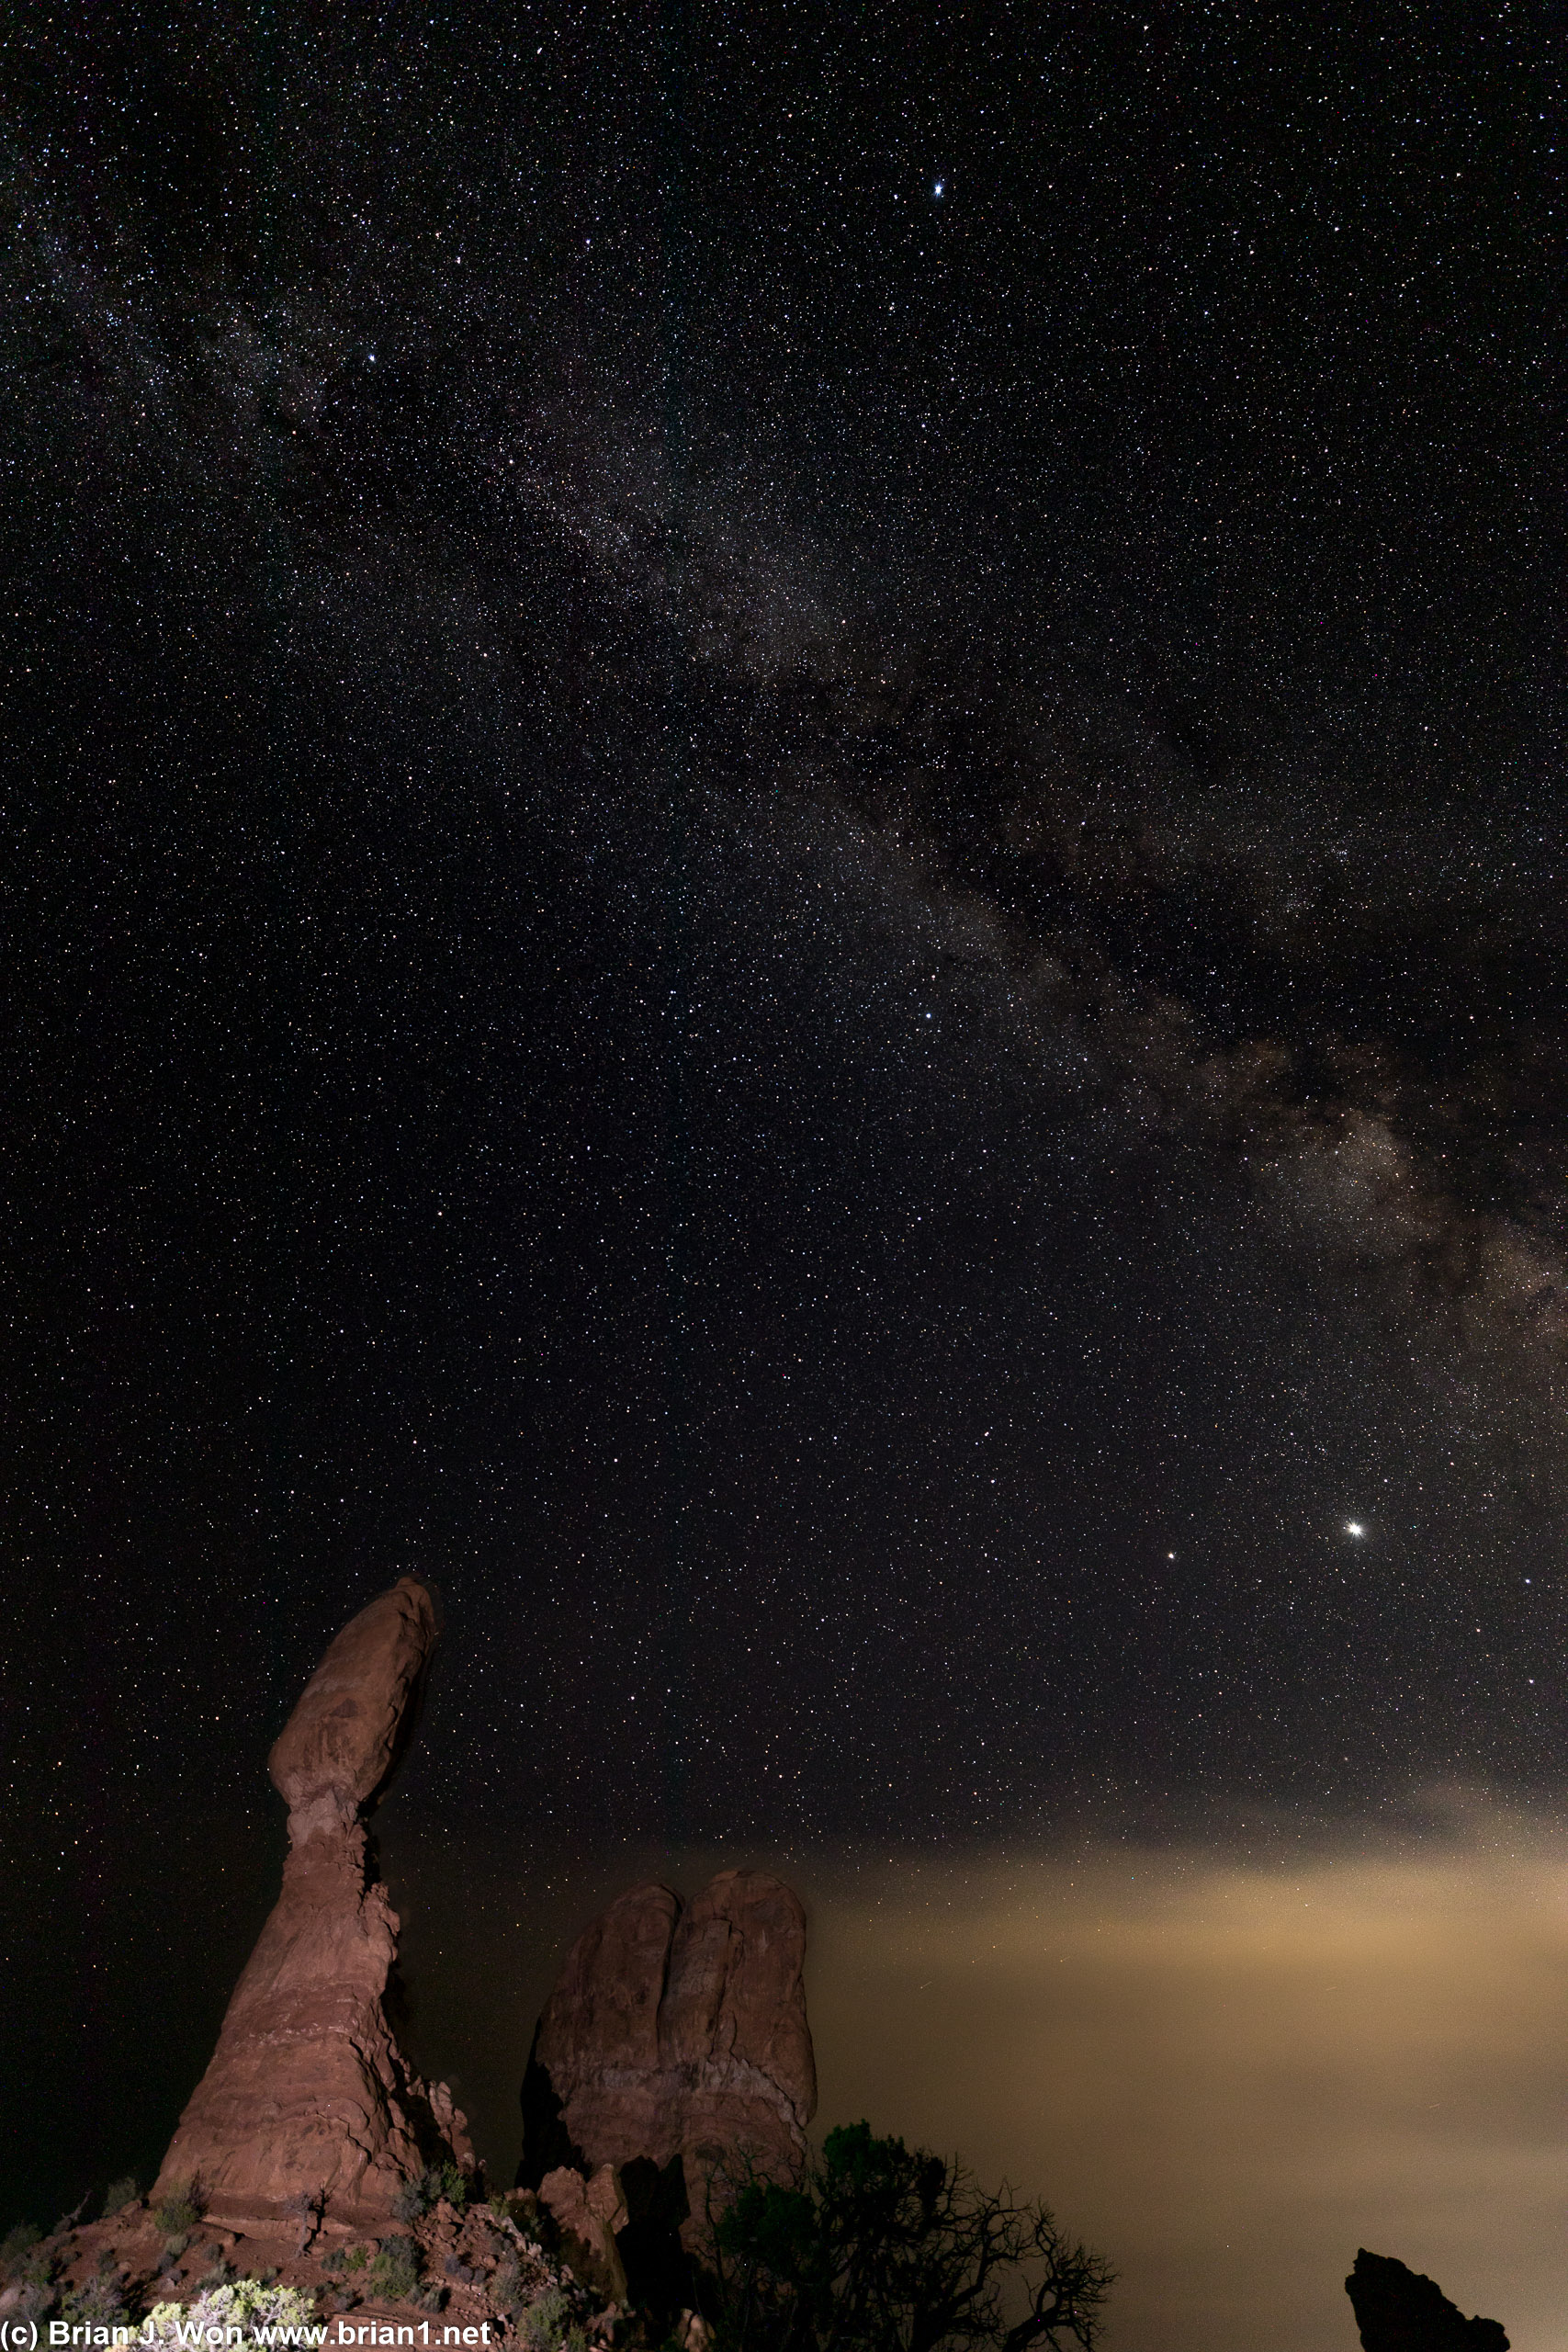 Light pollution and haze, meet the Milky Way and Balanced Rock.